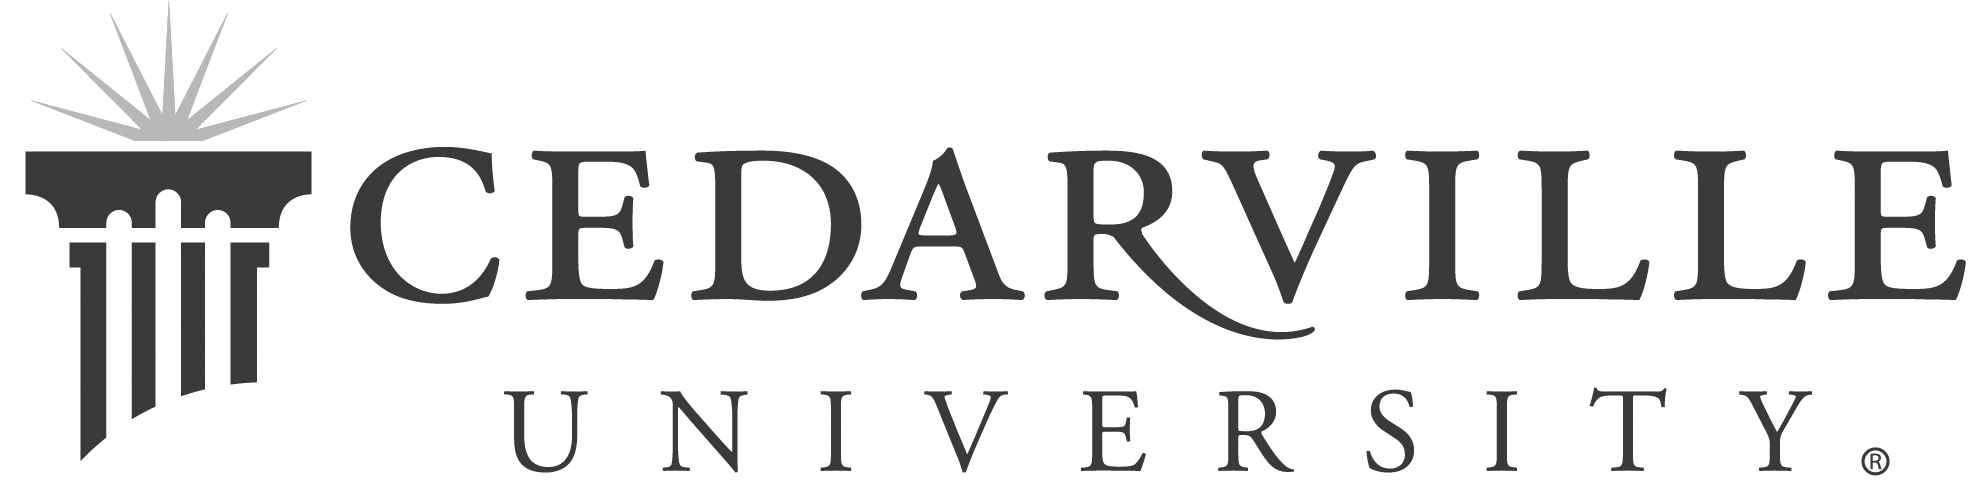 Cedarville University Logo E1648308300479